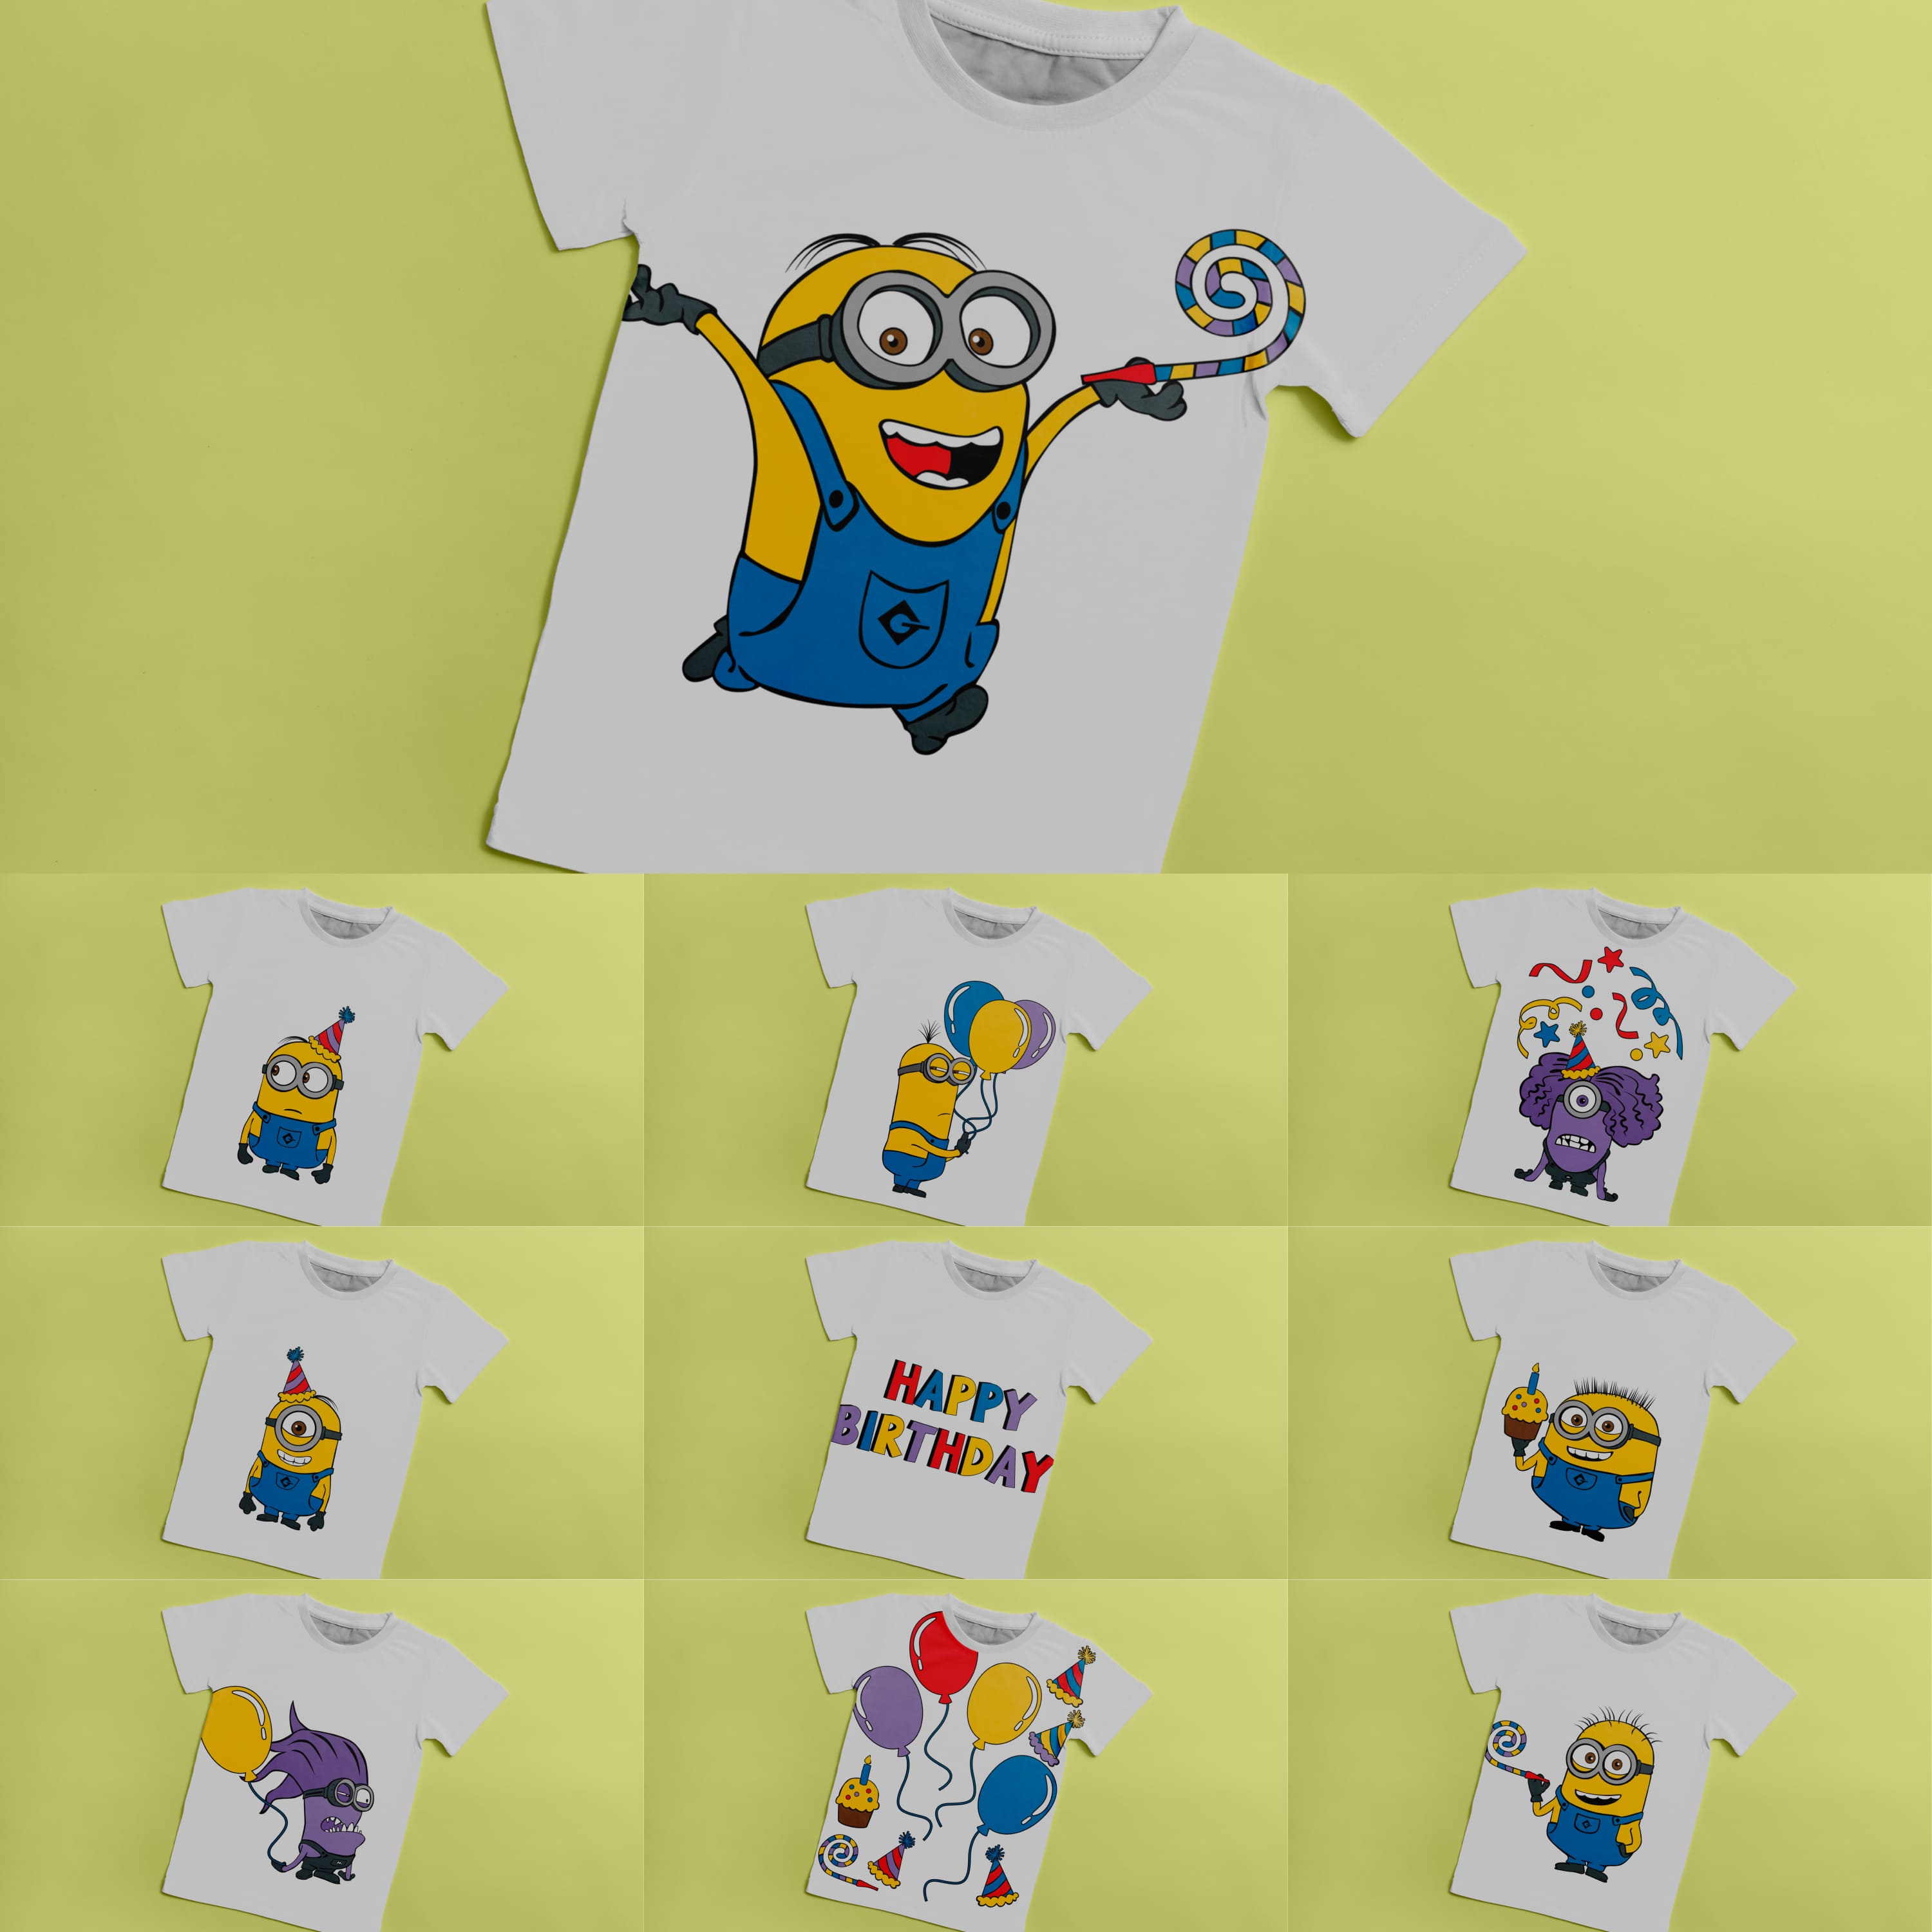 Minion Birthday T-shirt Designs Cover.